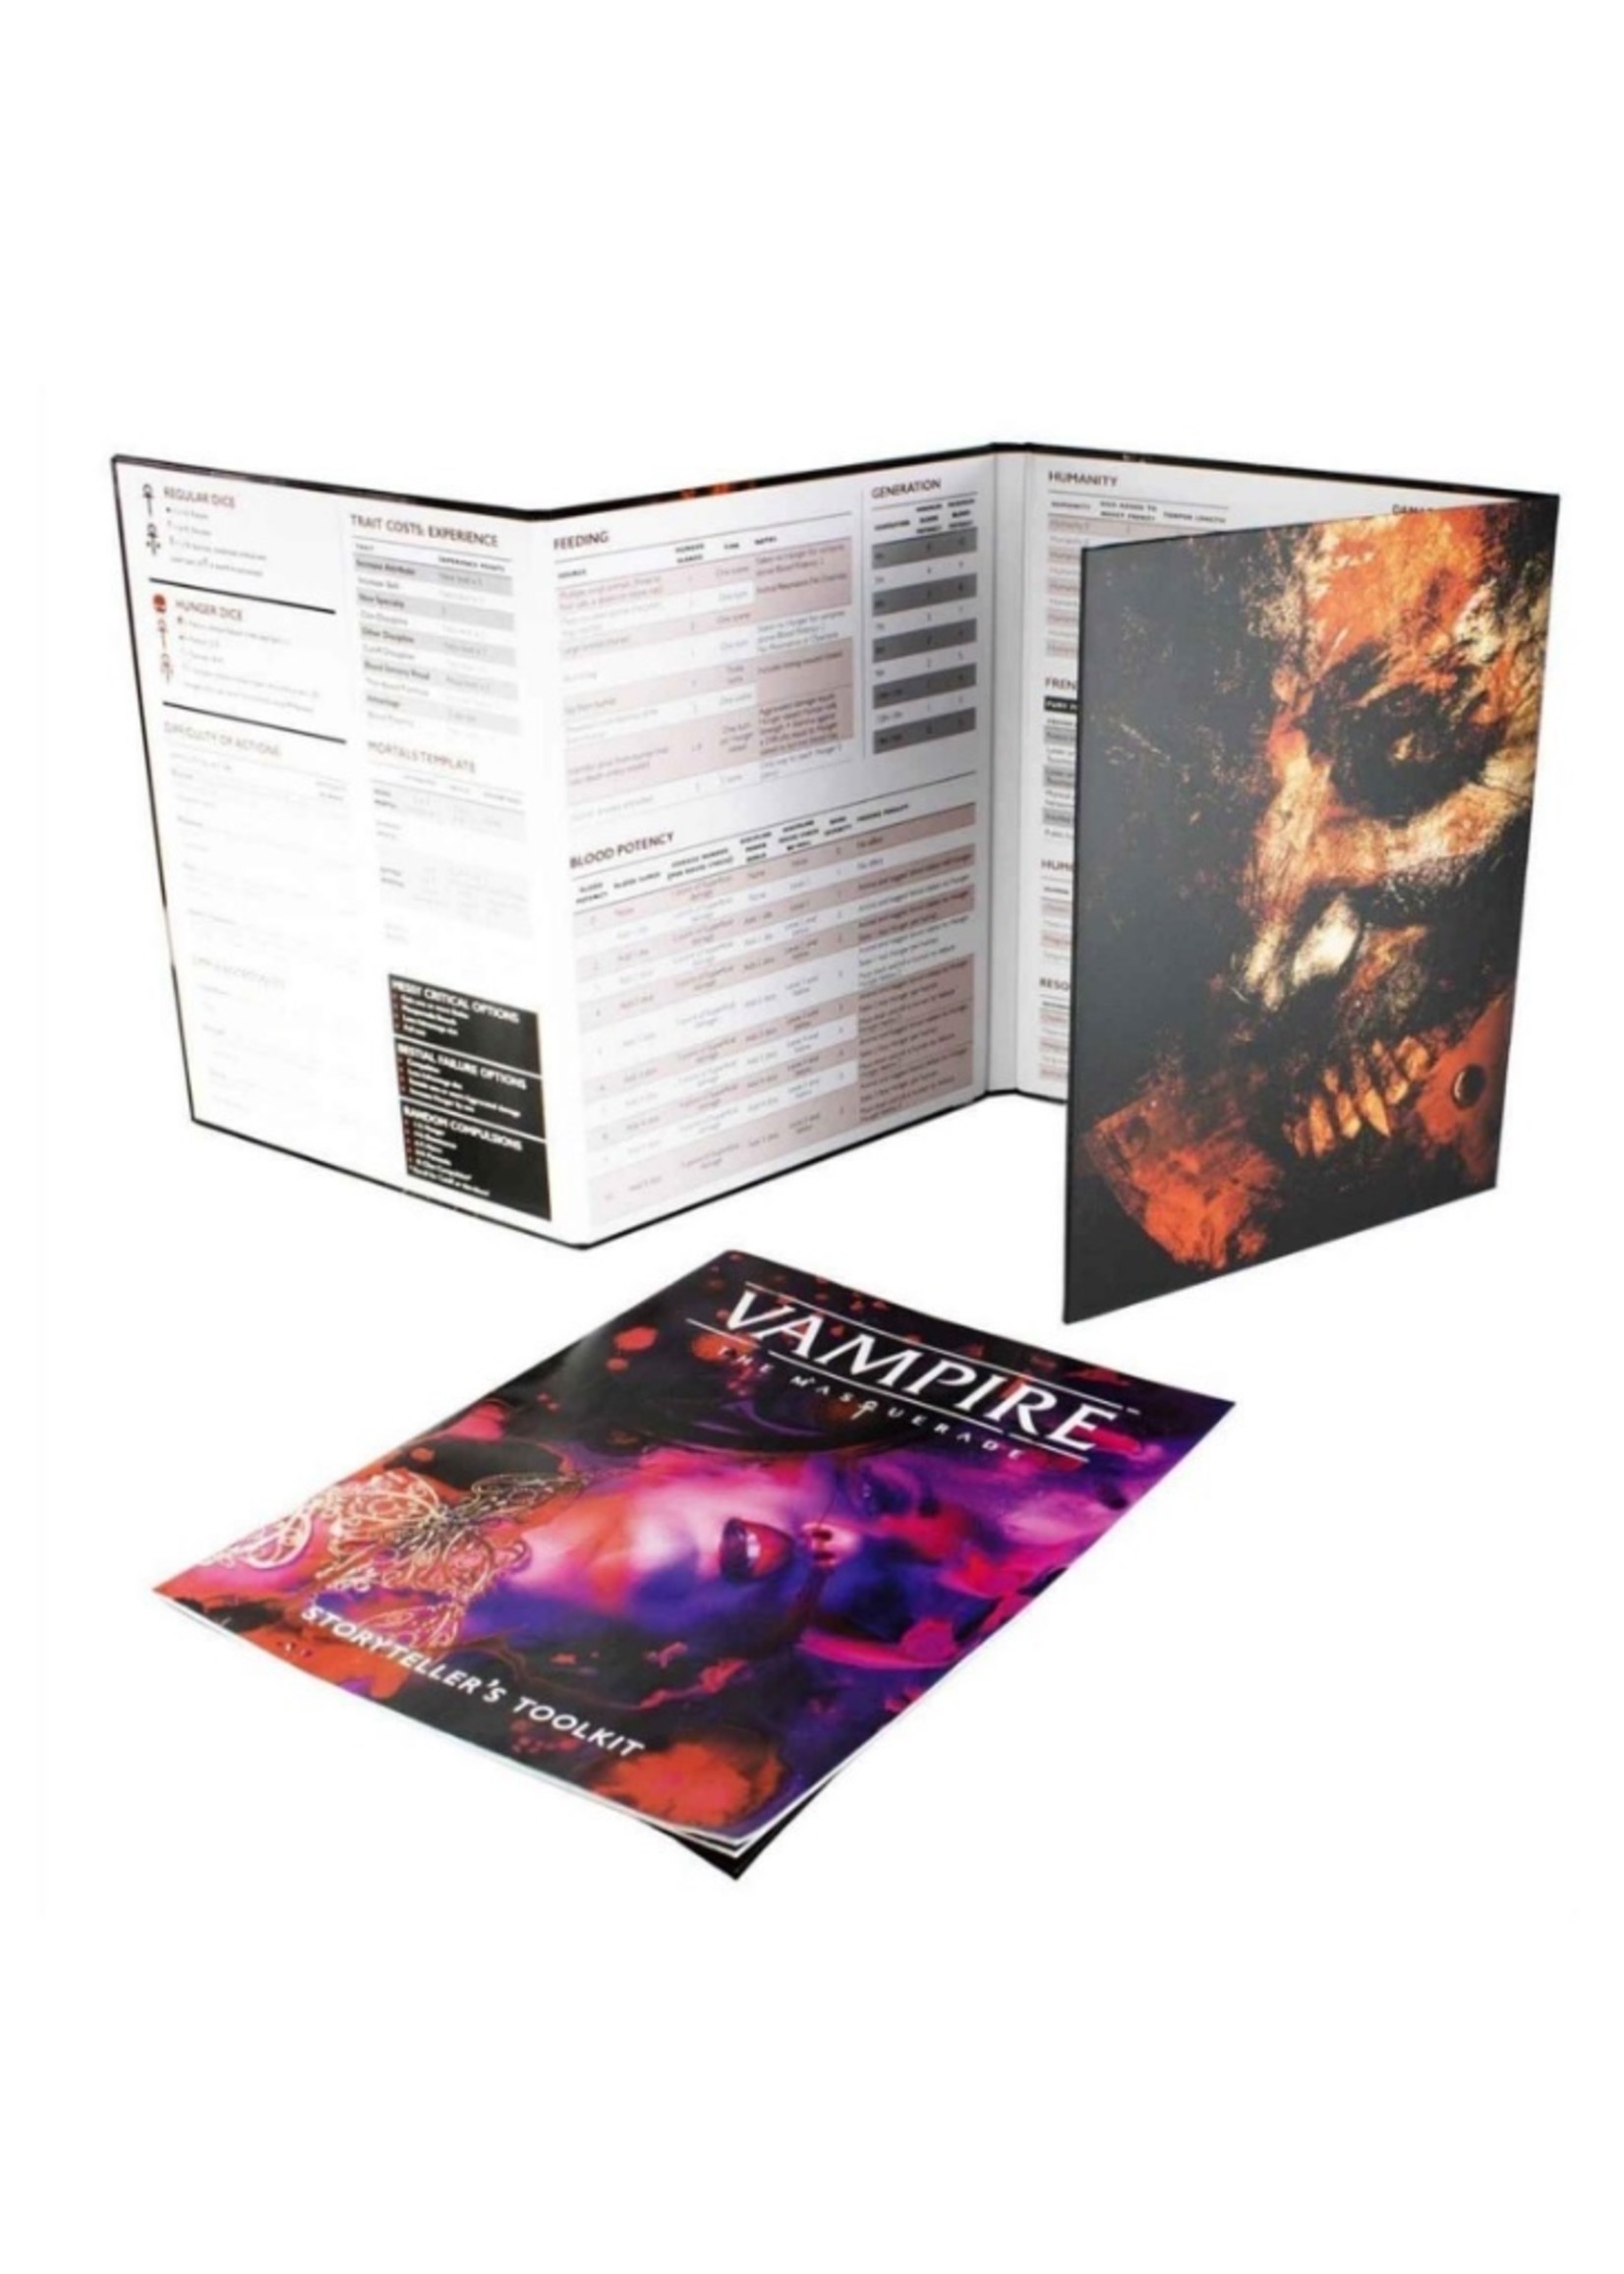 Noctilucent Music Pack addon - Vampire: The Masquerade